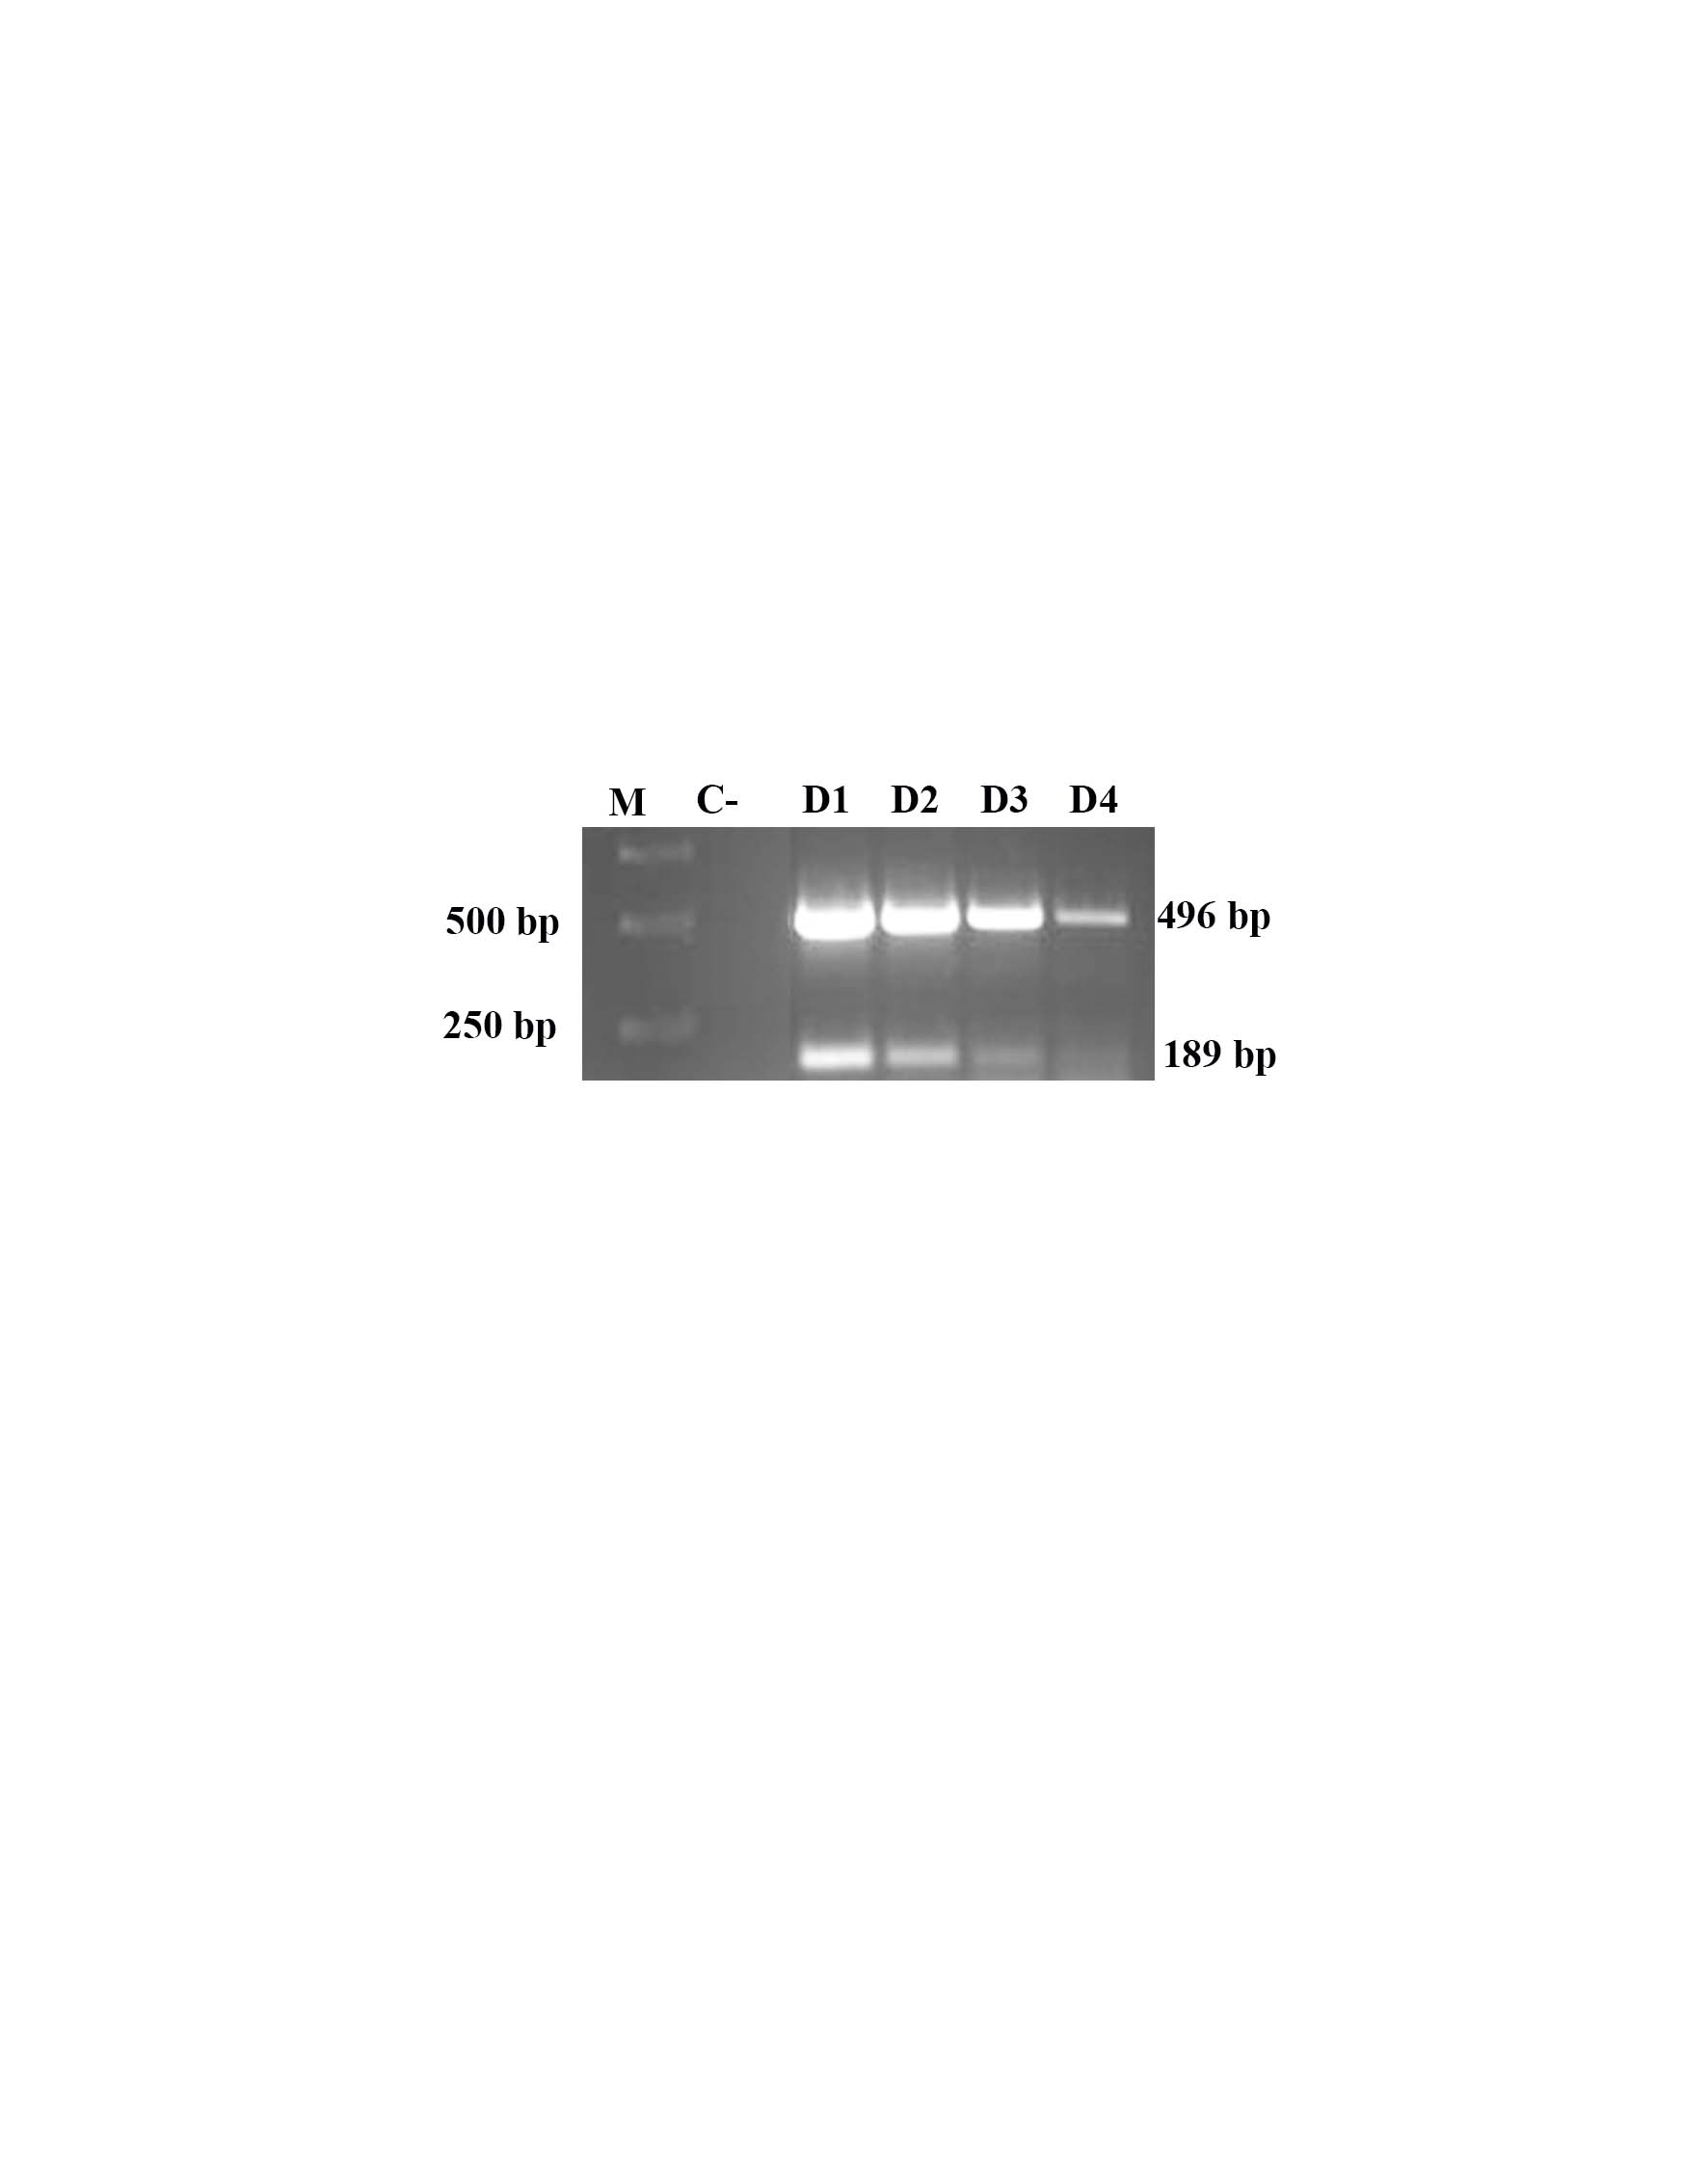 Figure 3. Sensitivity of duplex PCR